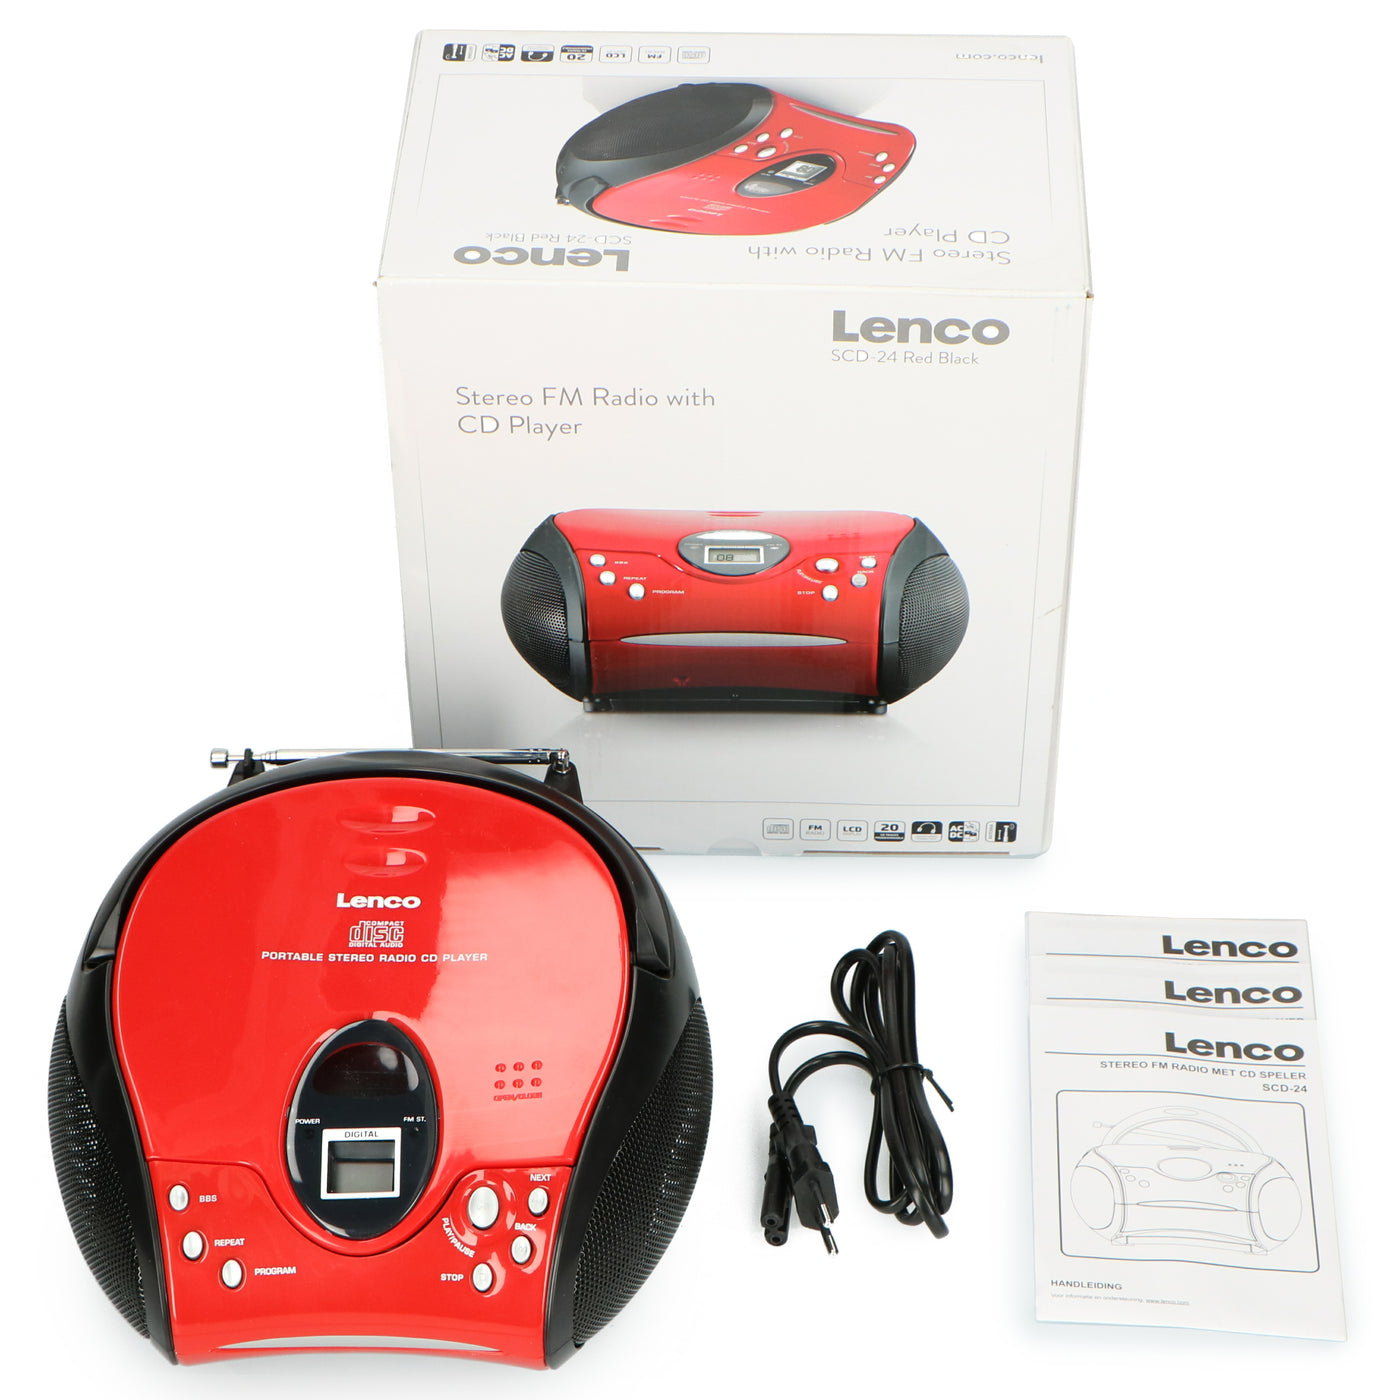 with CD – Portable FM SCD-24 Red/Black player stereo Red LENCO - radio - Lenco-Catalog